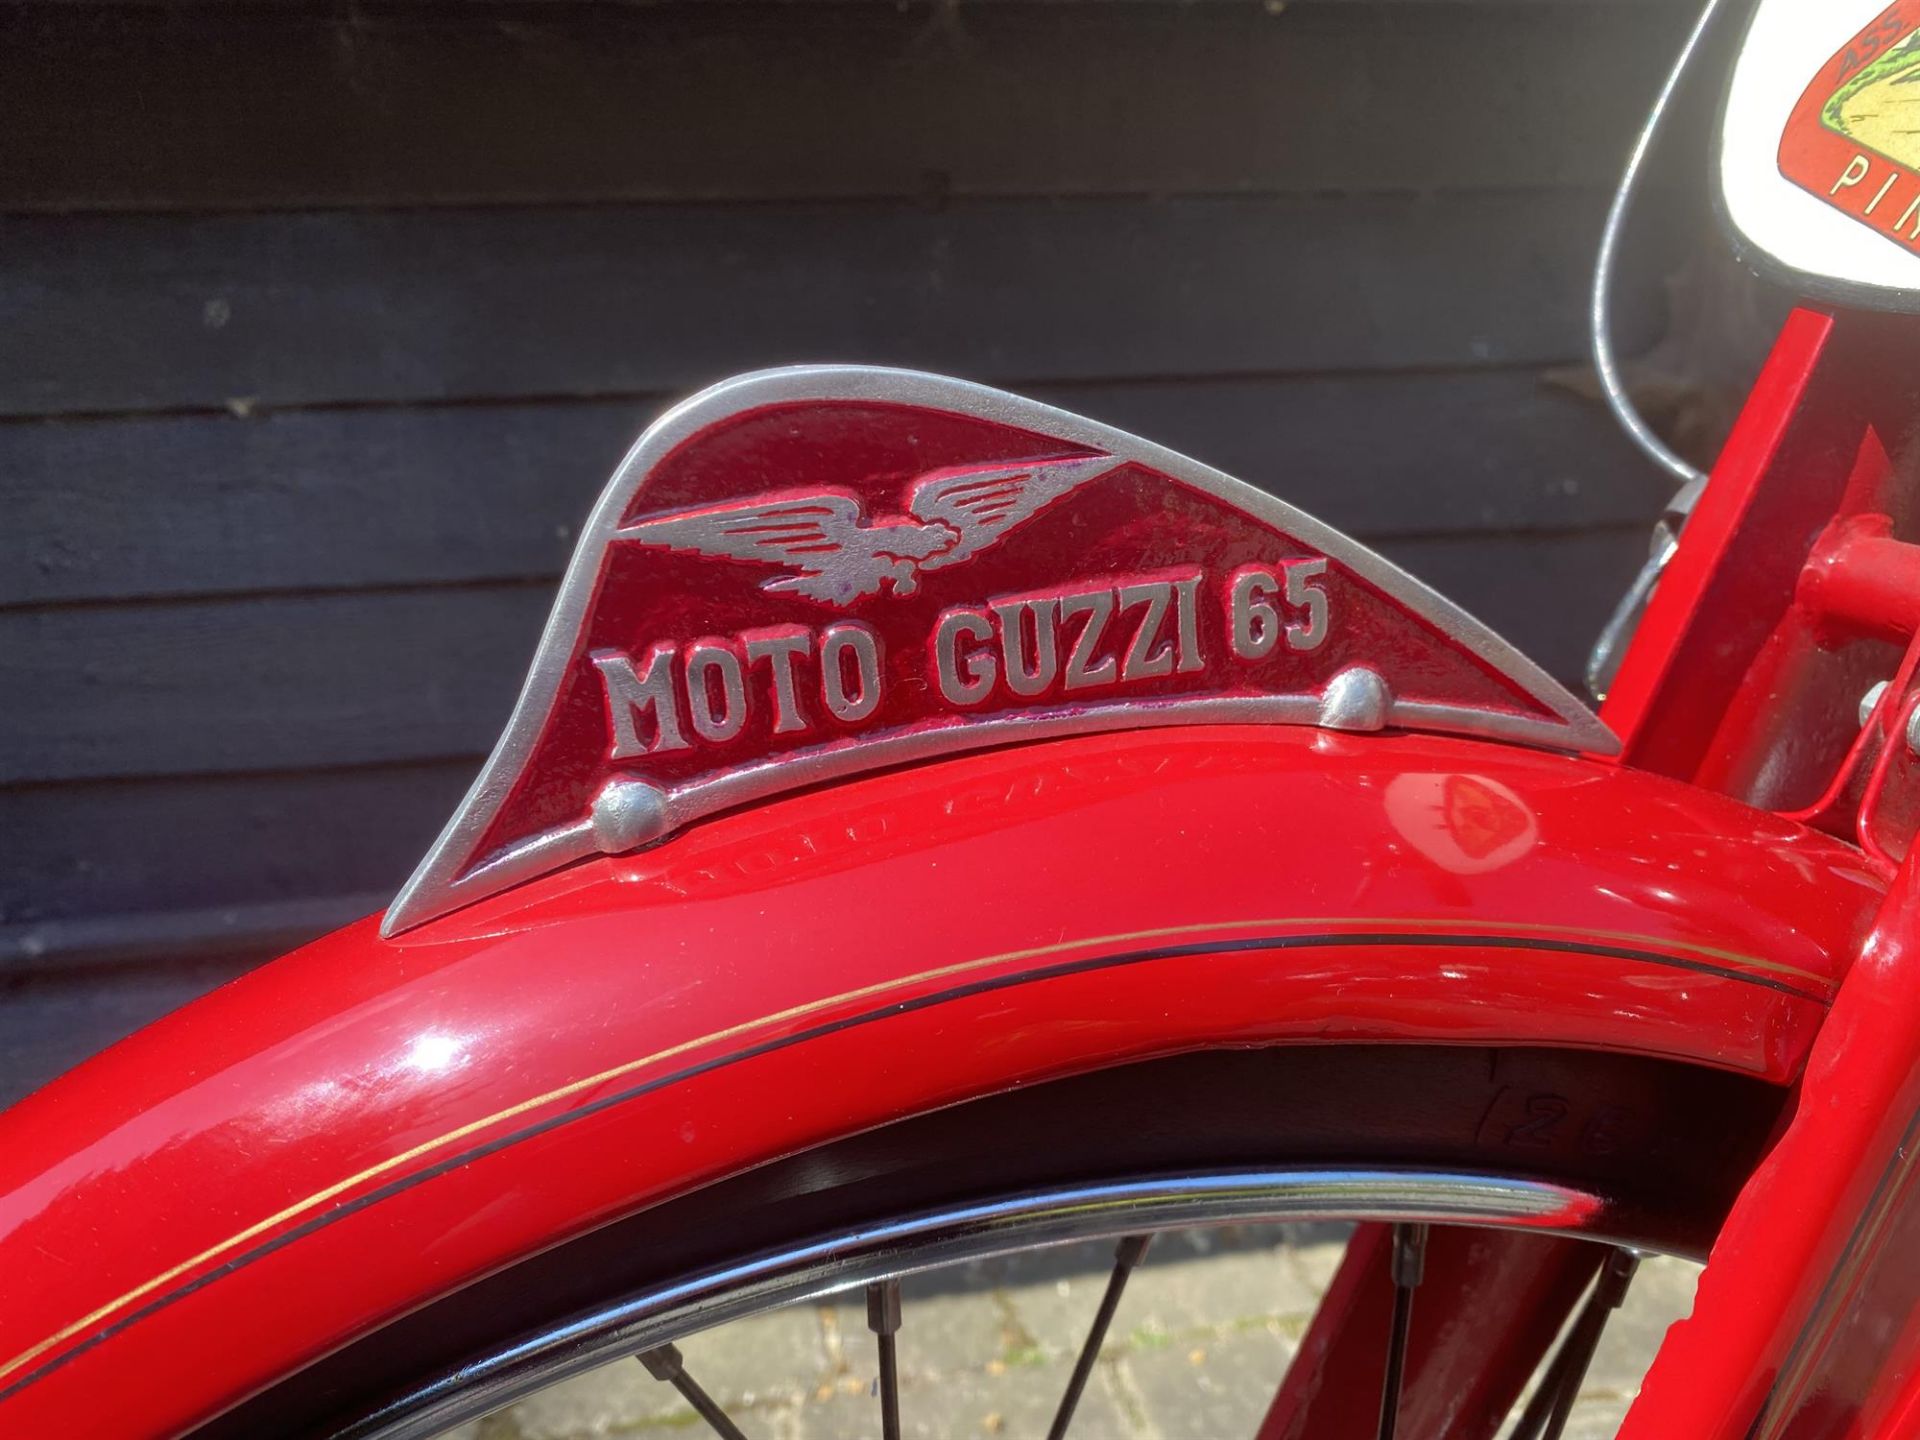 1949 Moto Guzzi Motoleggera 65 'Guzzino' 73cc - Image 10 of 10